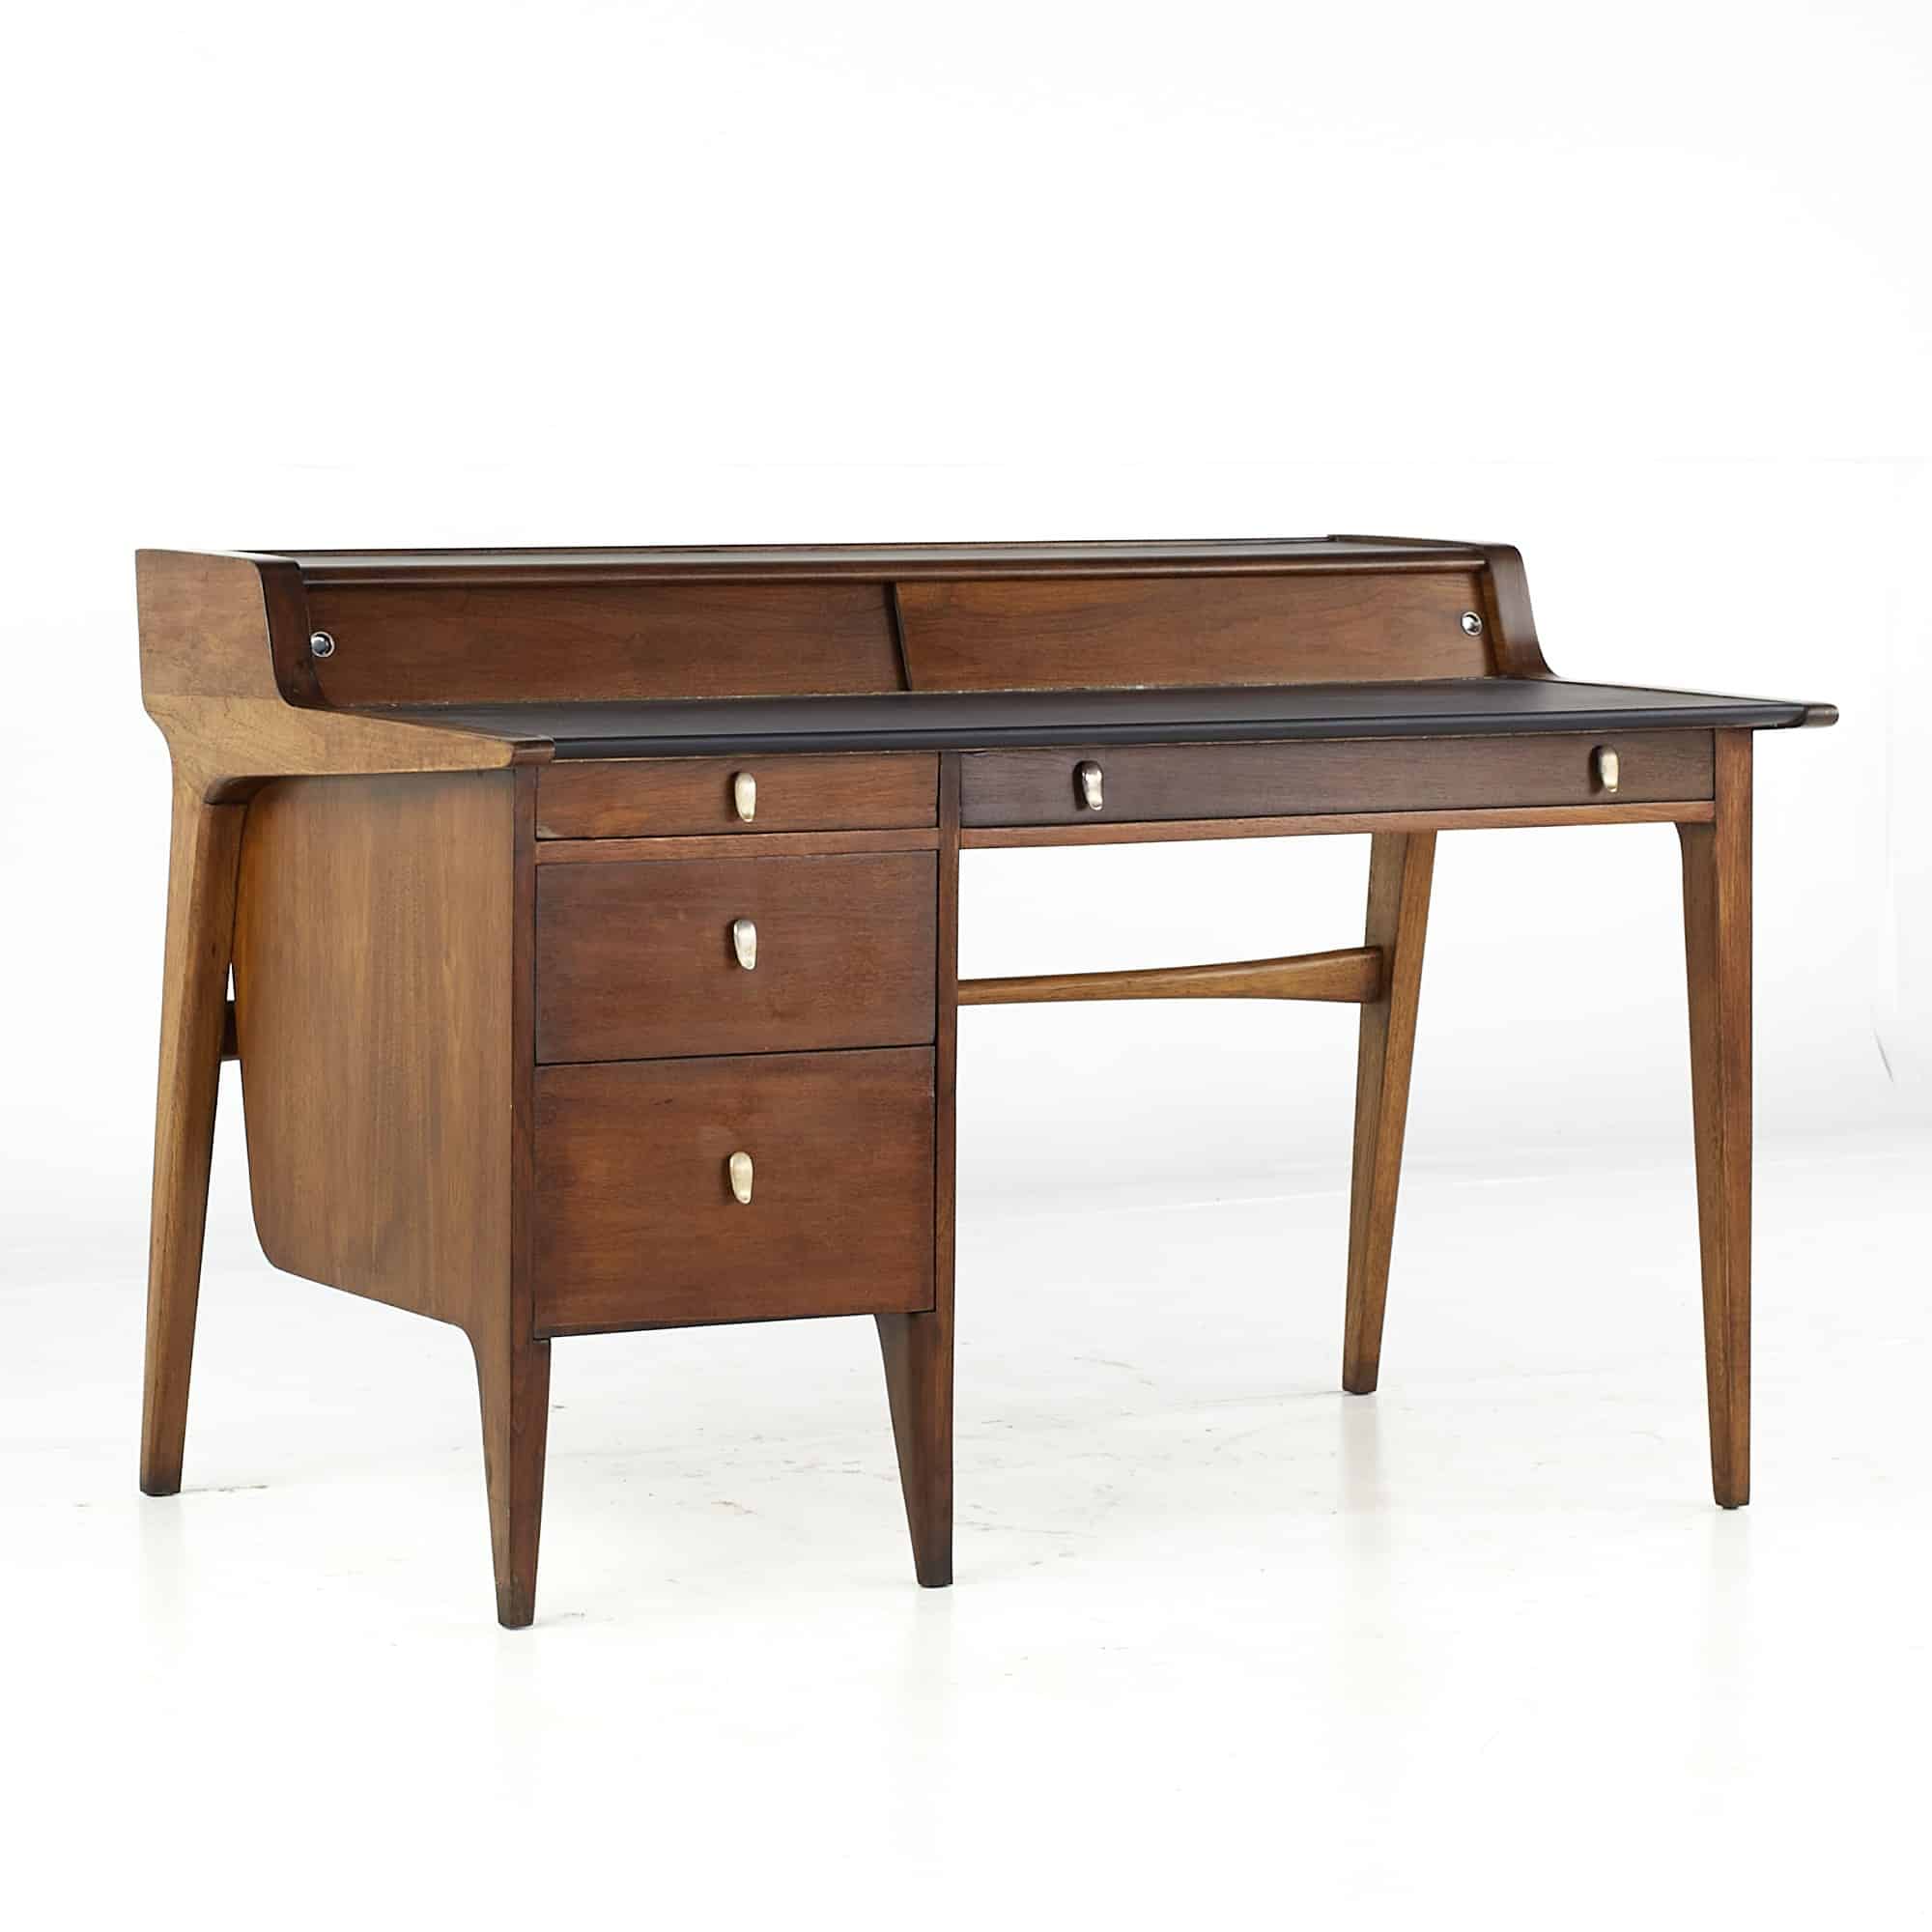 John Van Koert for Drexel Profile Mid Century Leather Top Walnut Desk